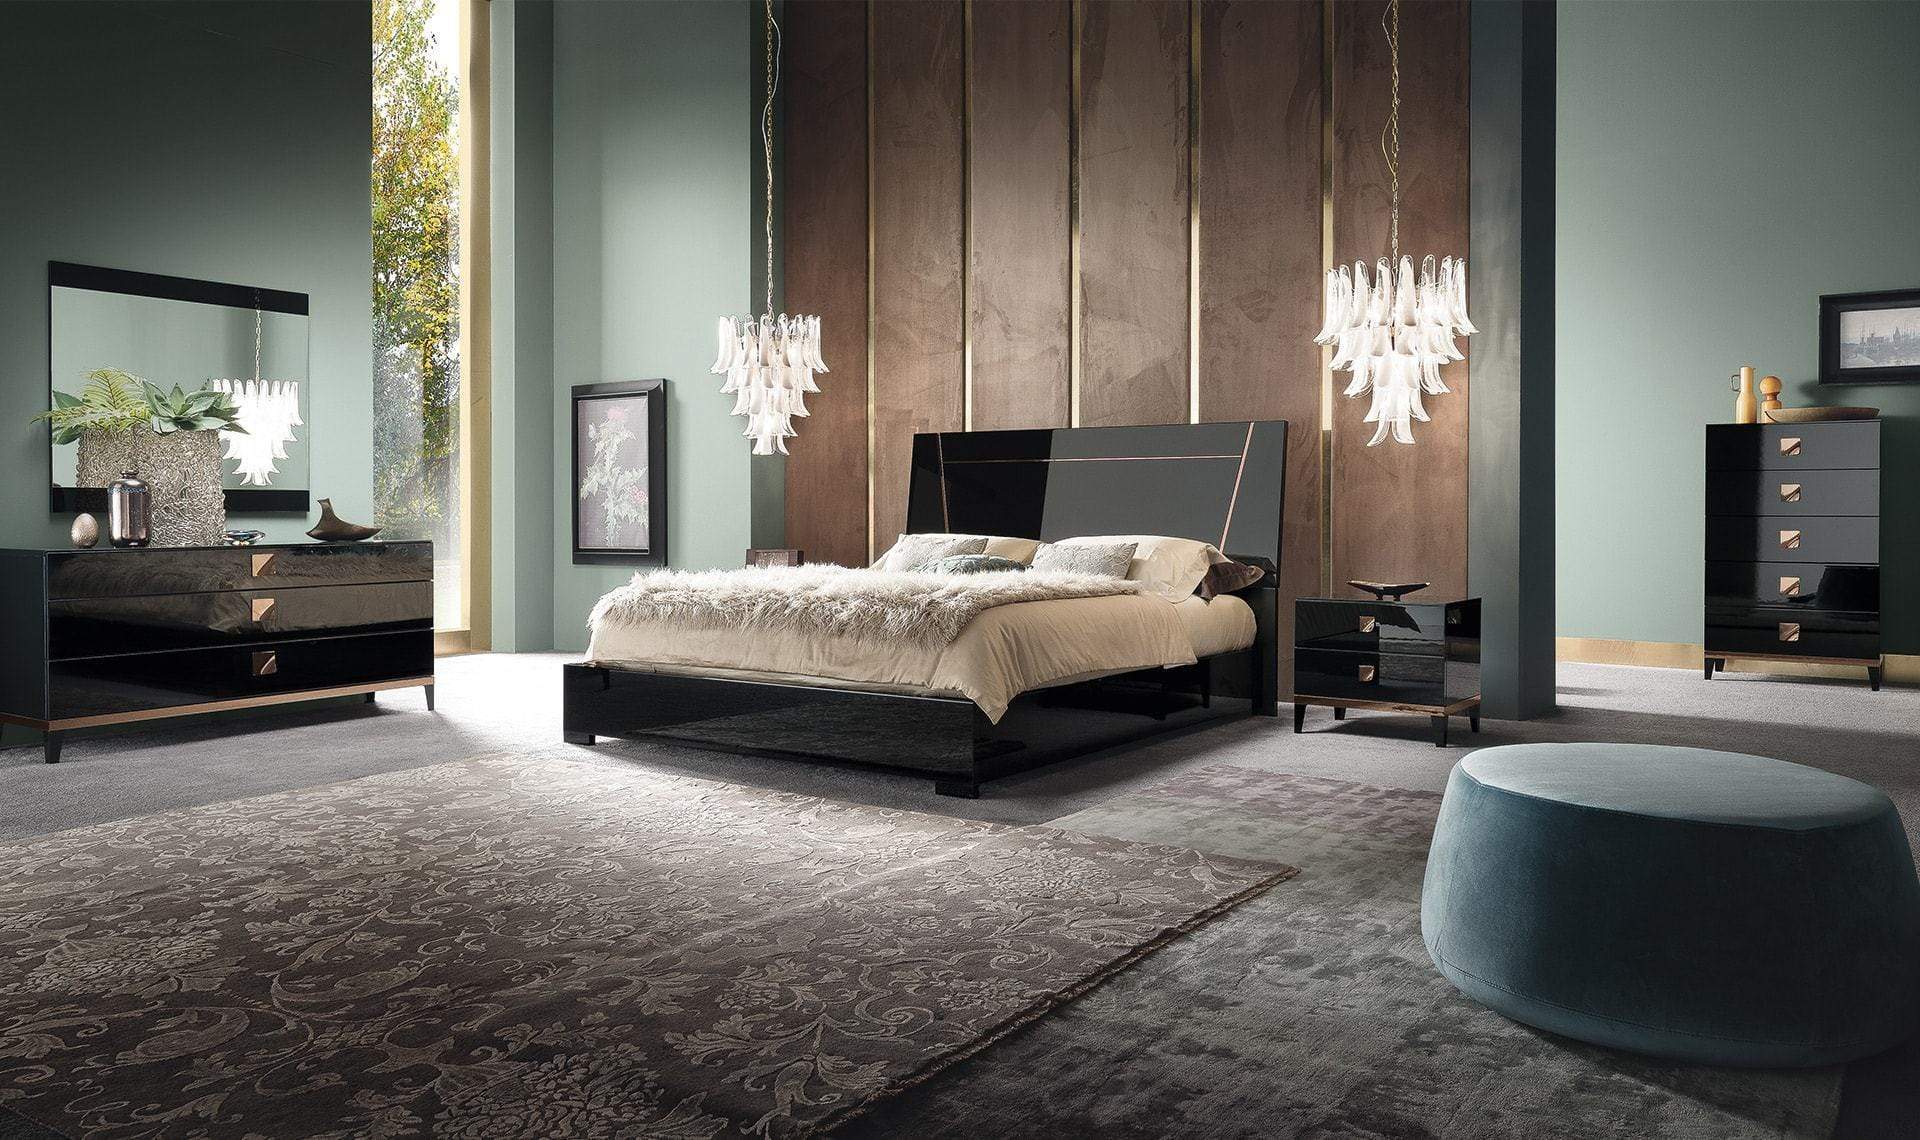 Alf Italia Bedroom Sets Mont Noir Bedroom Collection